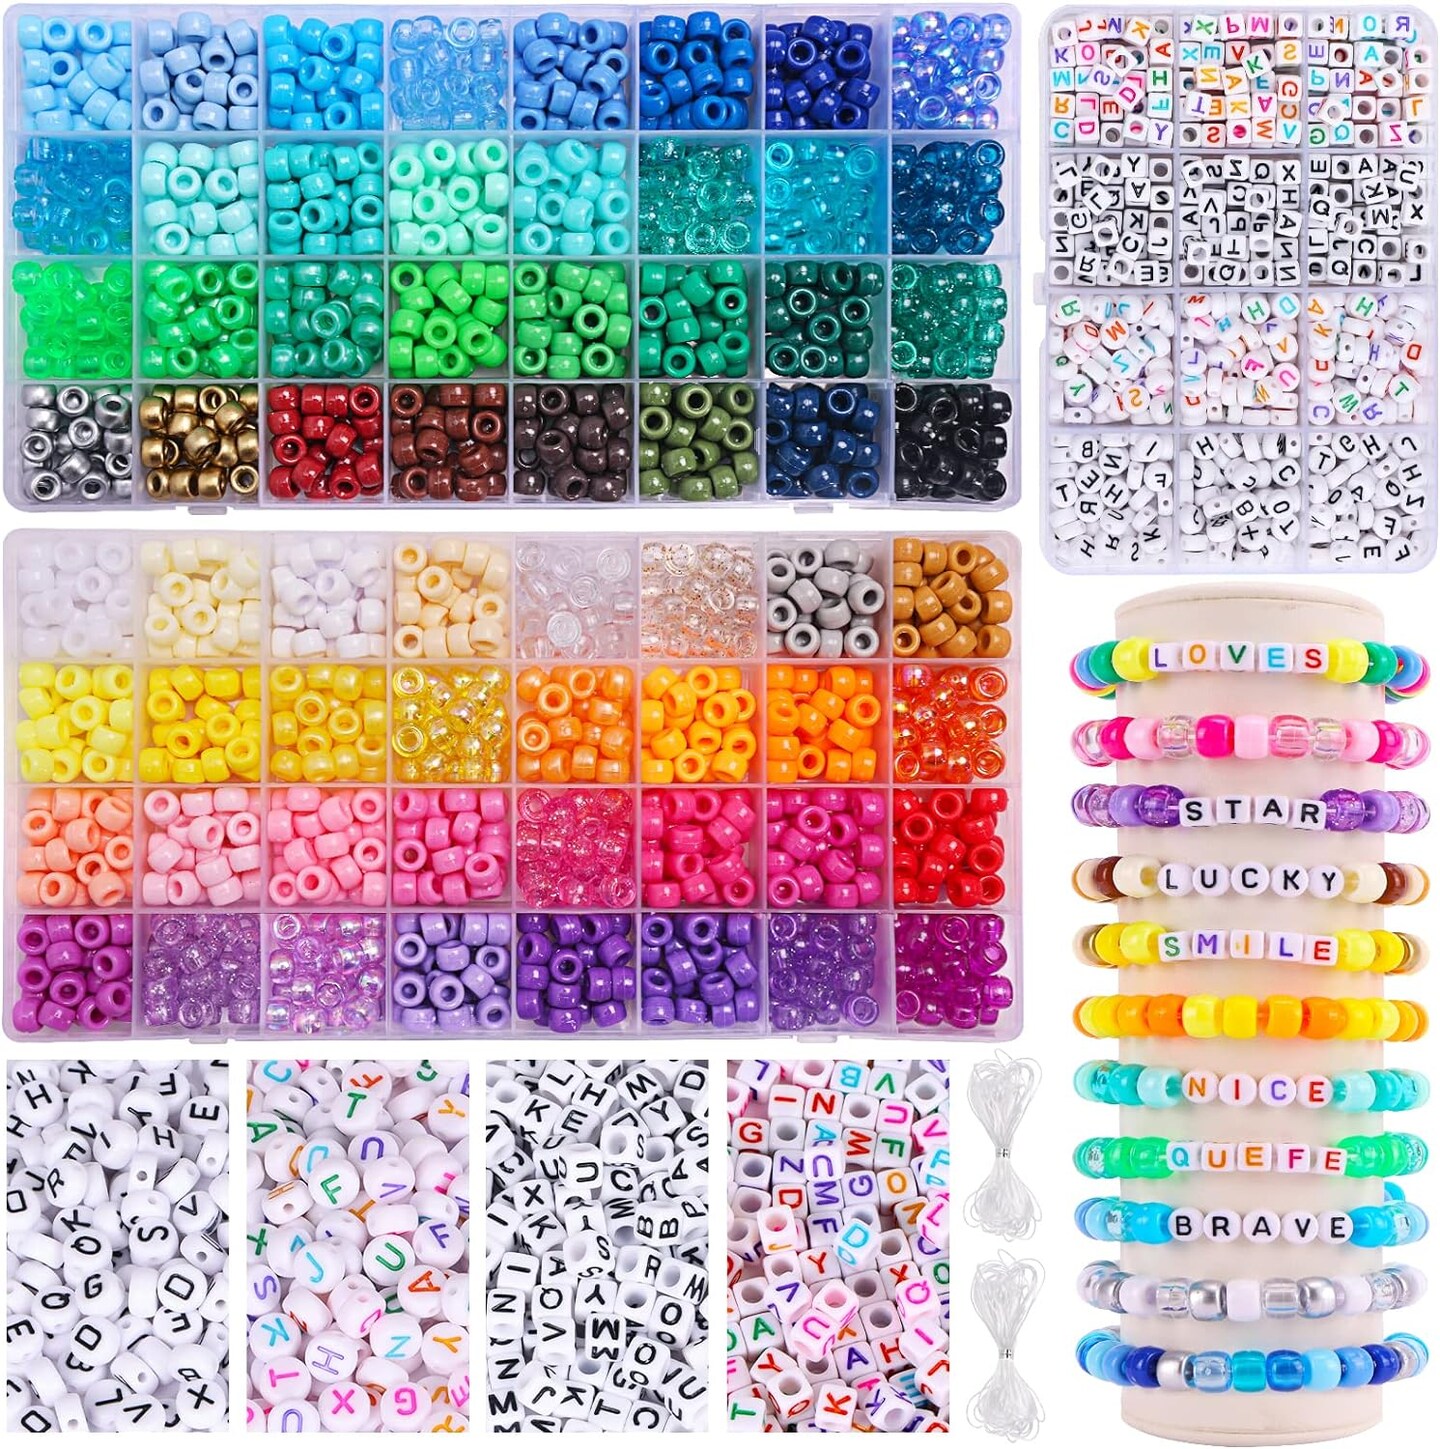 2350pcs, 64 Colors, Pony Beads for Bracelet Making Kit, Rainbow Kandi Beads Friendship Bracelet Kit, Letter Beads and Elastic Strings for Bracelet Necklace Making, Craft Gifts Set for Girls